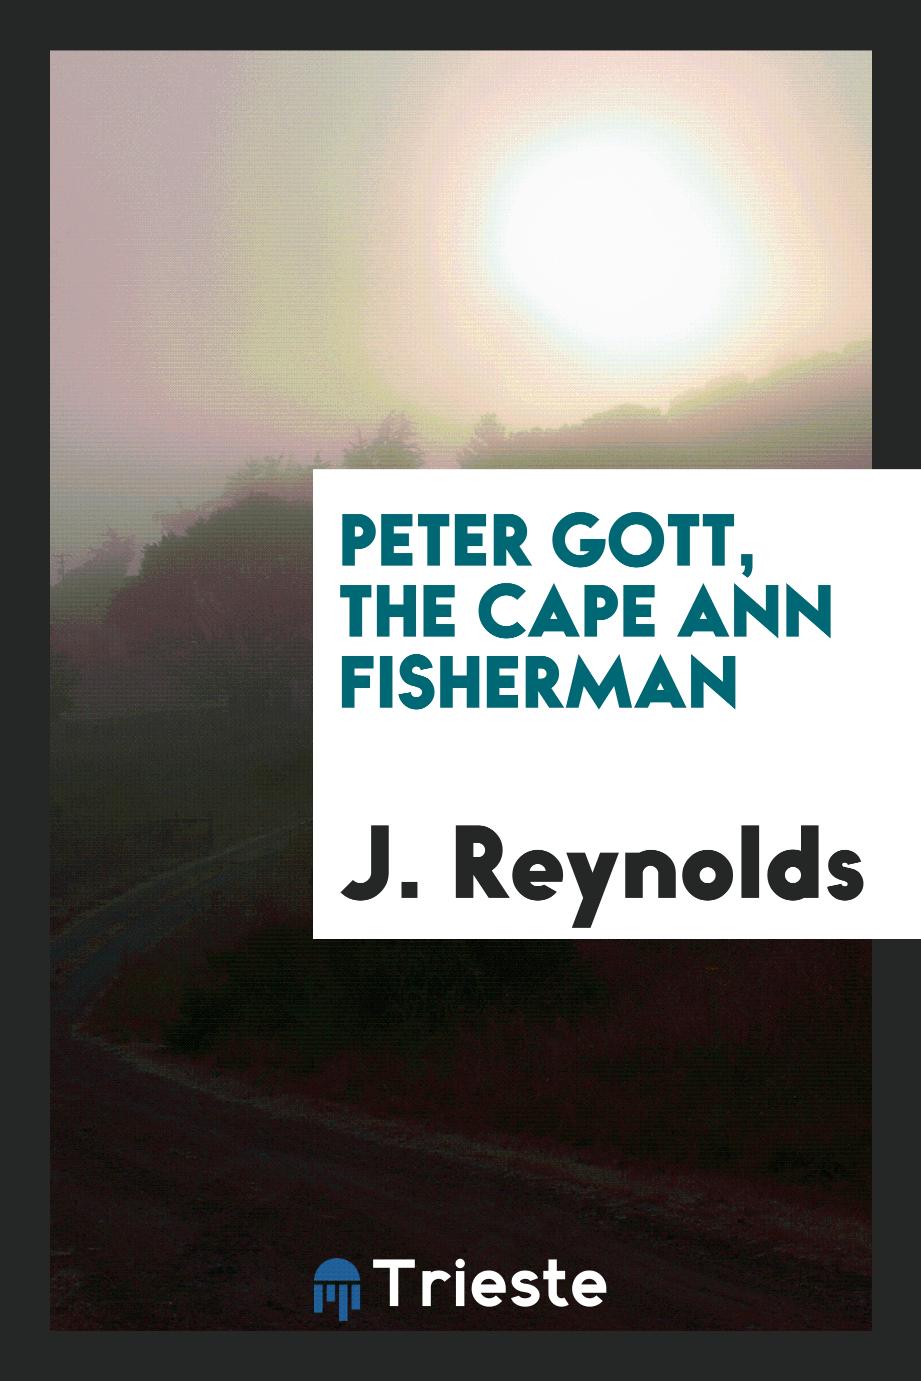 Peter Gott, the Cape Ann fisherman